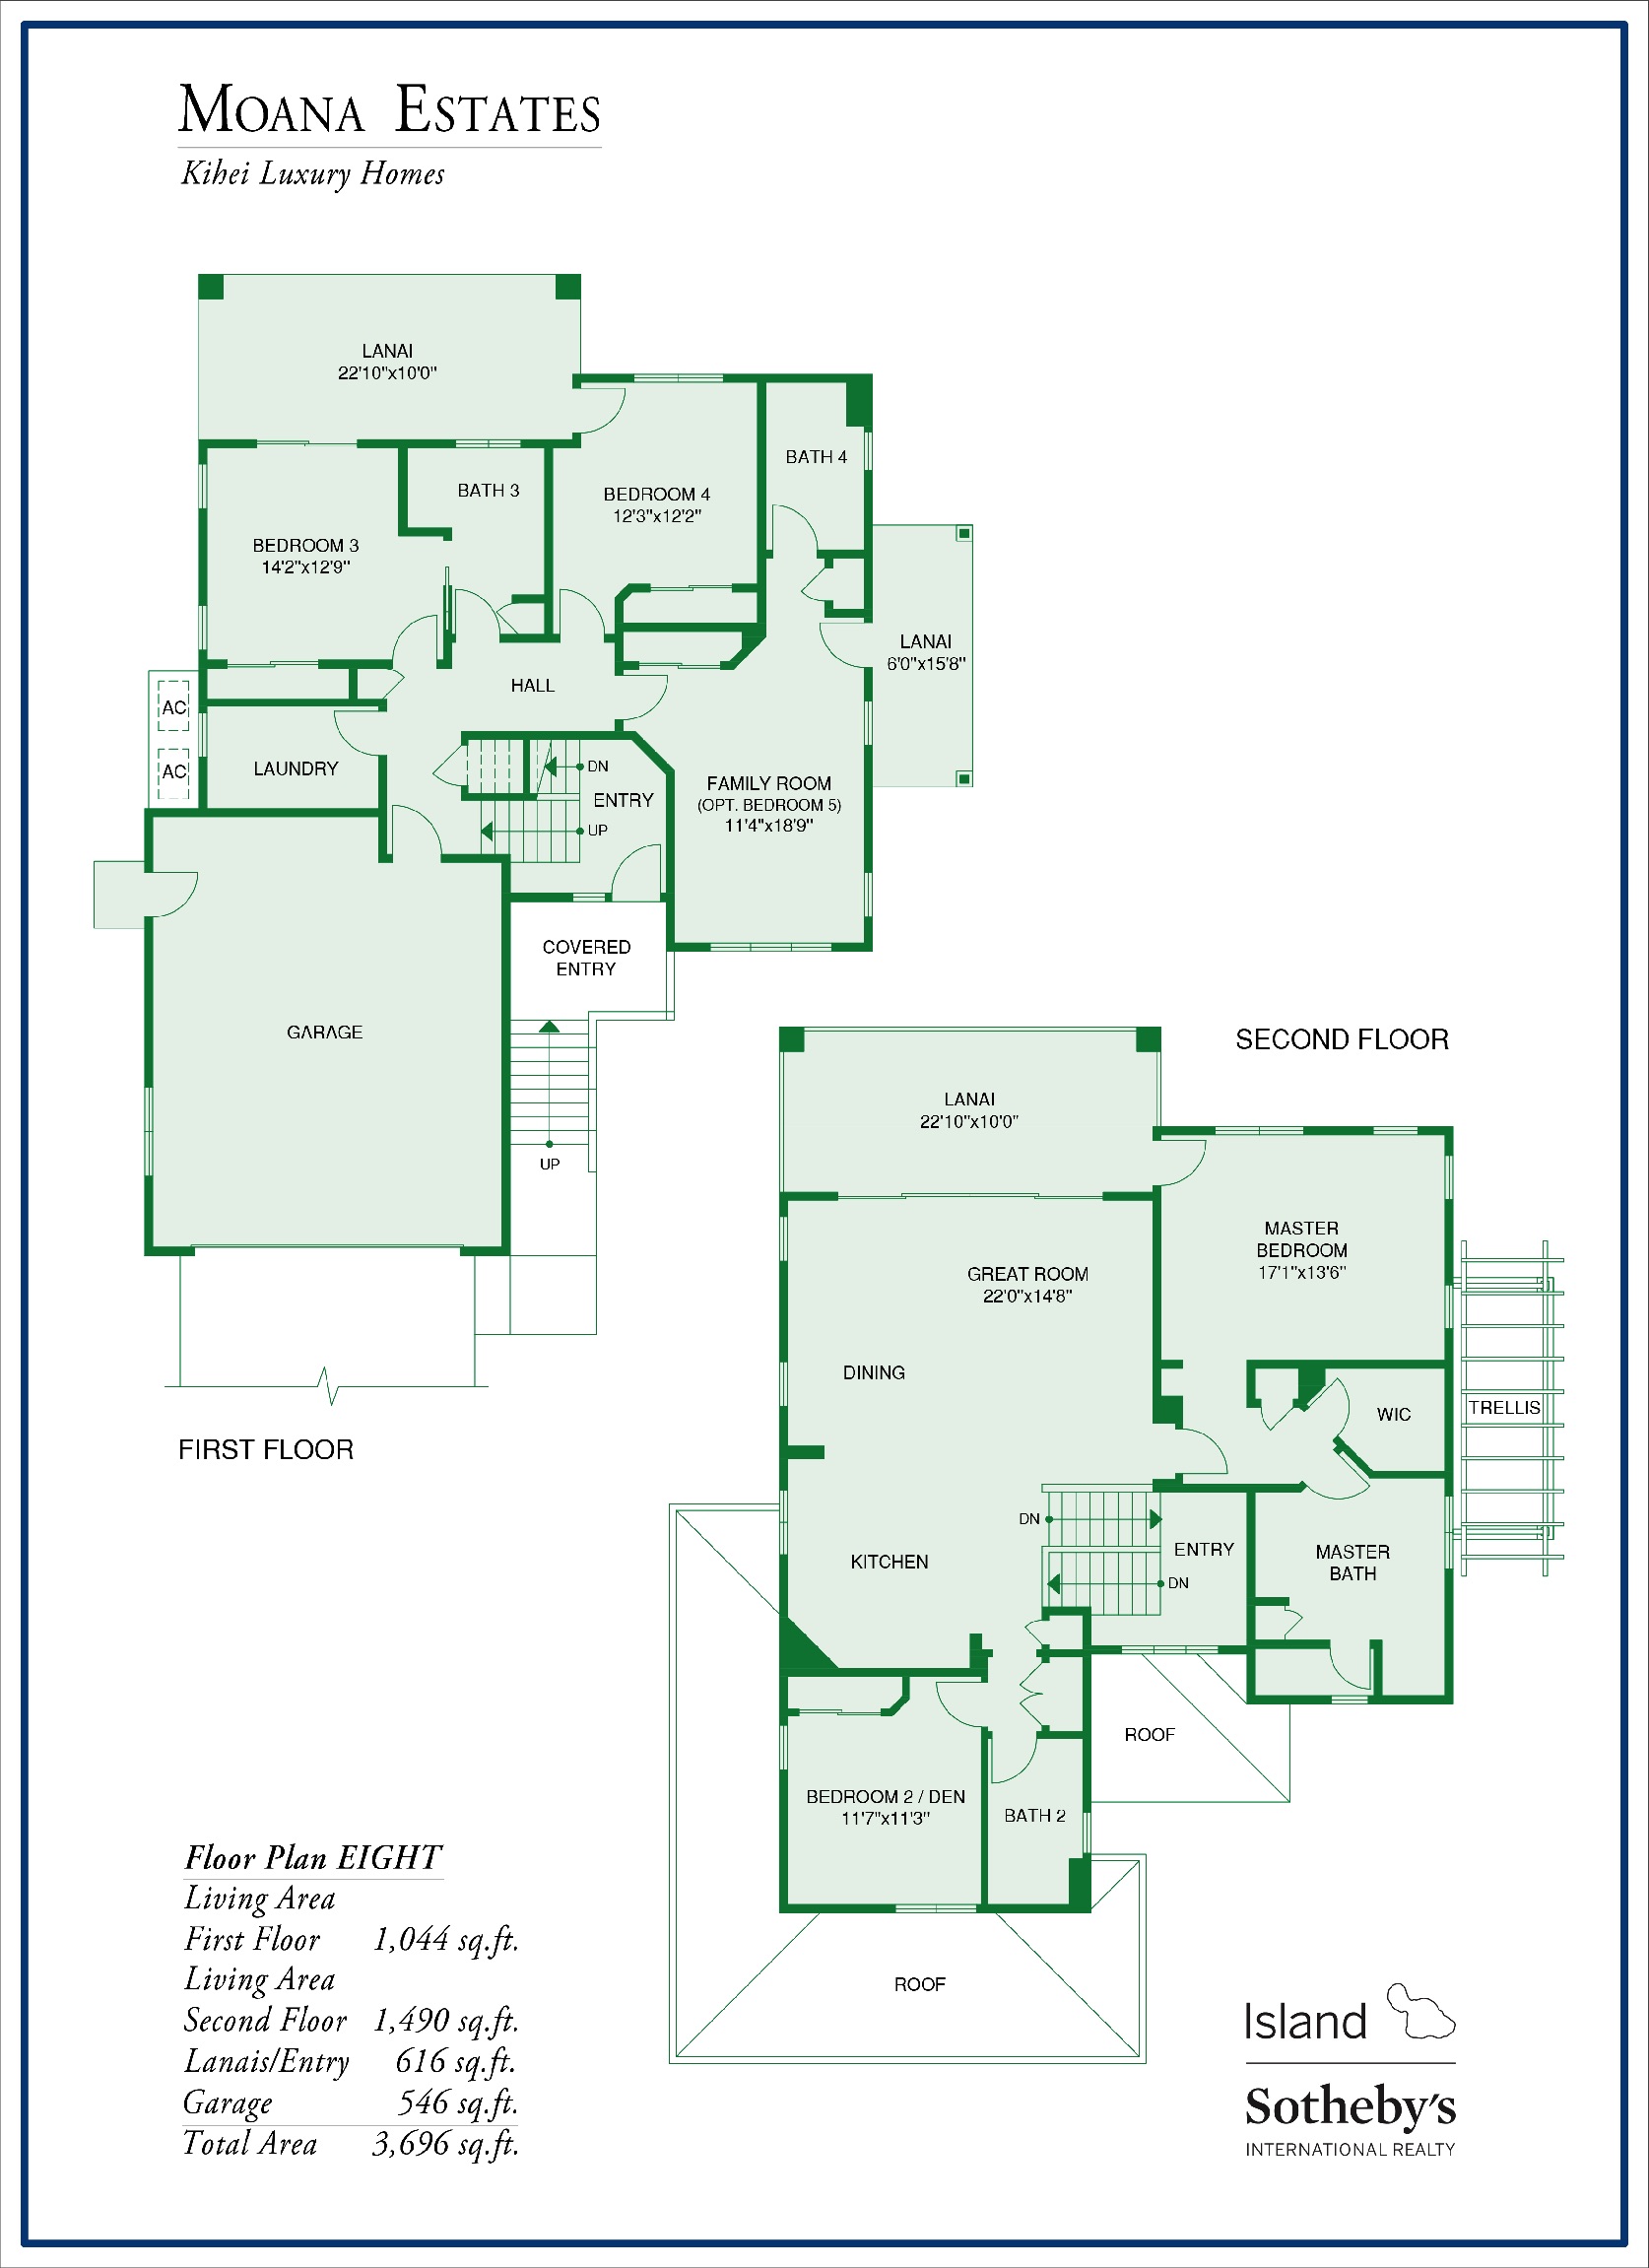 Moana Estates Floor Plan 8